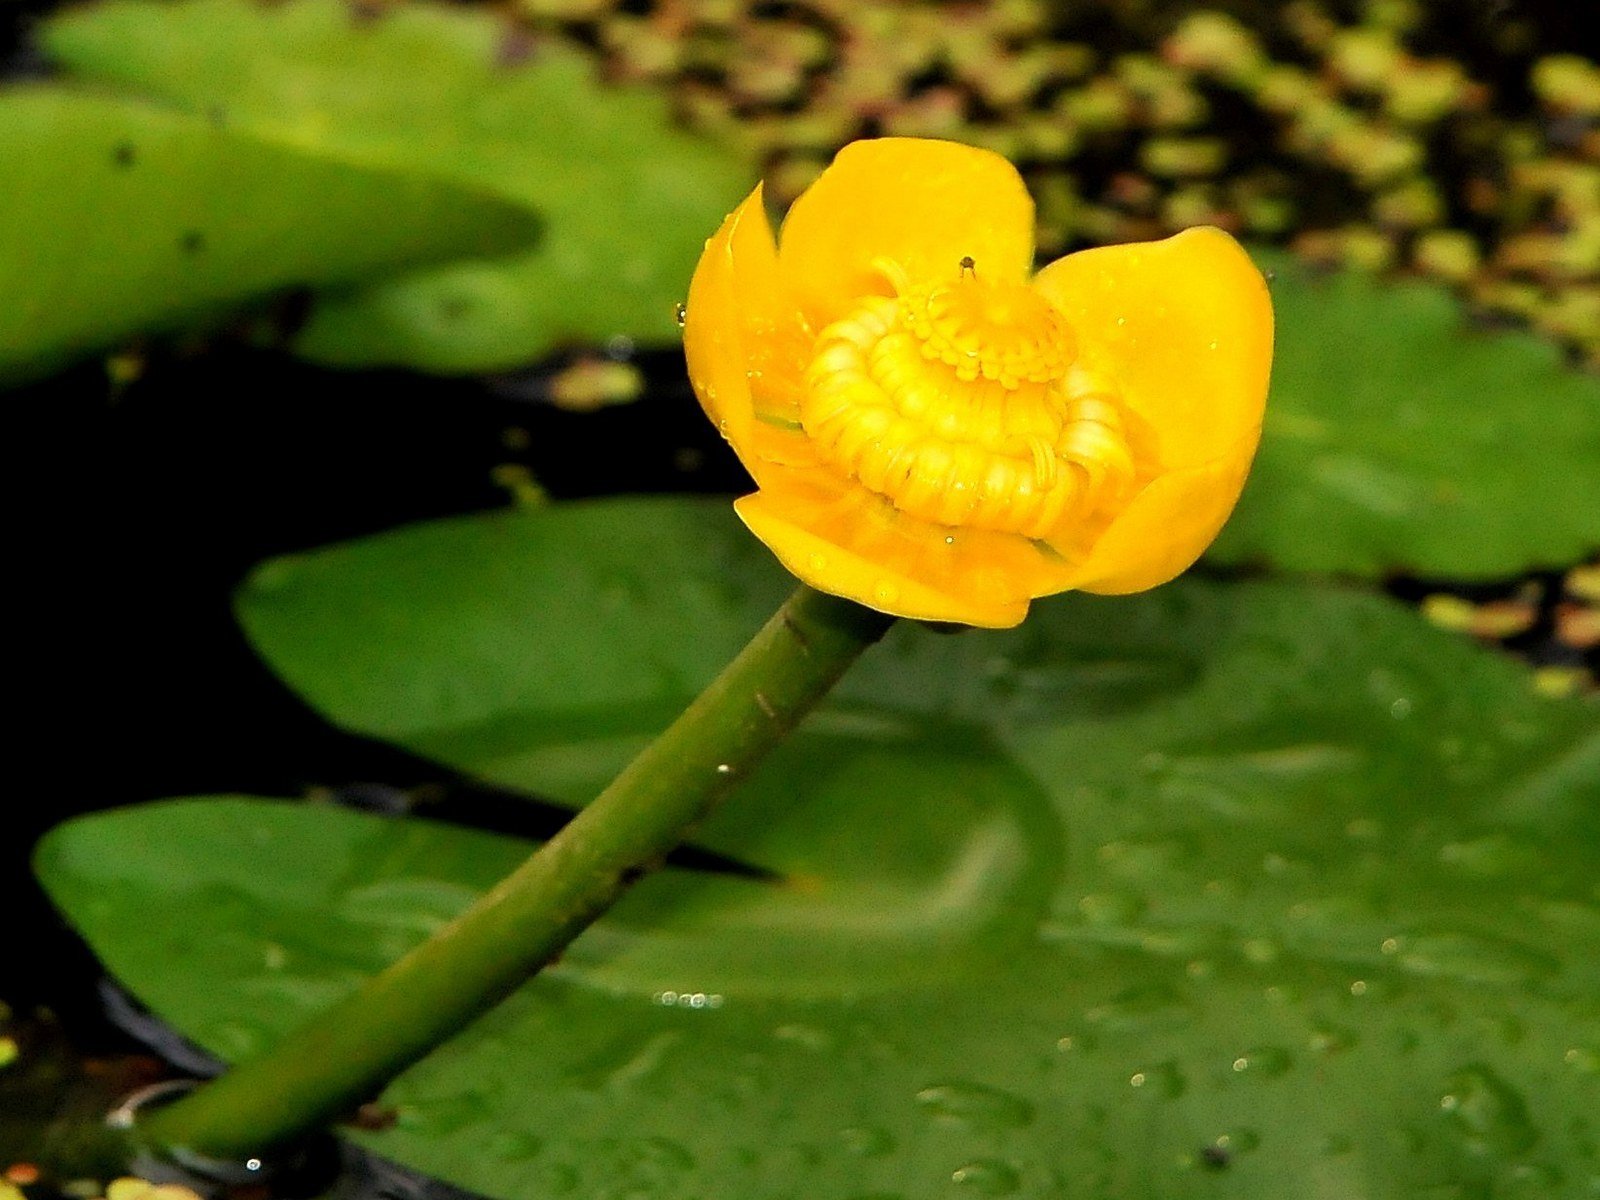 Nuphar lutea Круз. Кубышка жёлтая. Род  кубышка (Nuphar). Садовый цветок похожий на кубышку. Кубышка условия